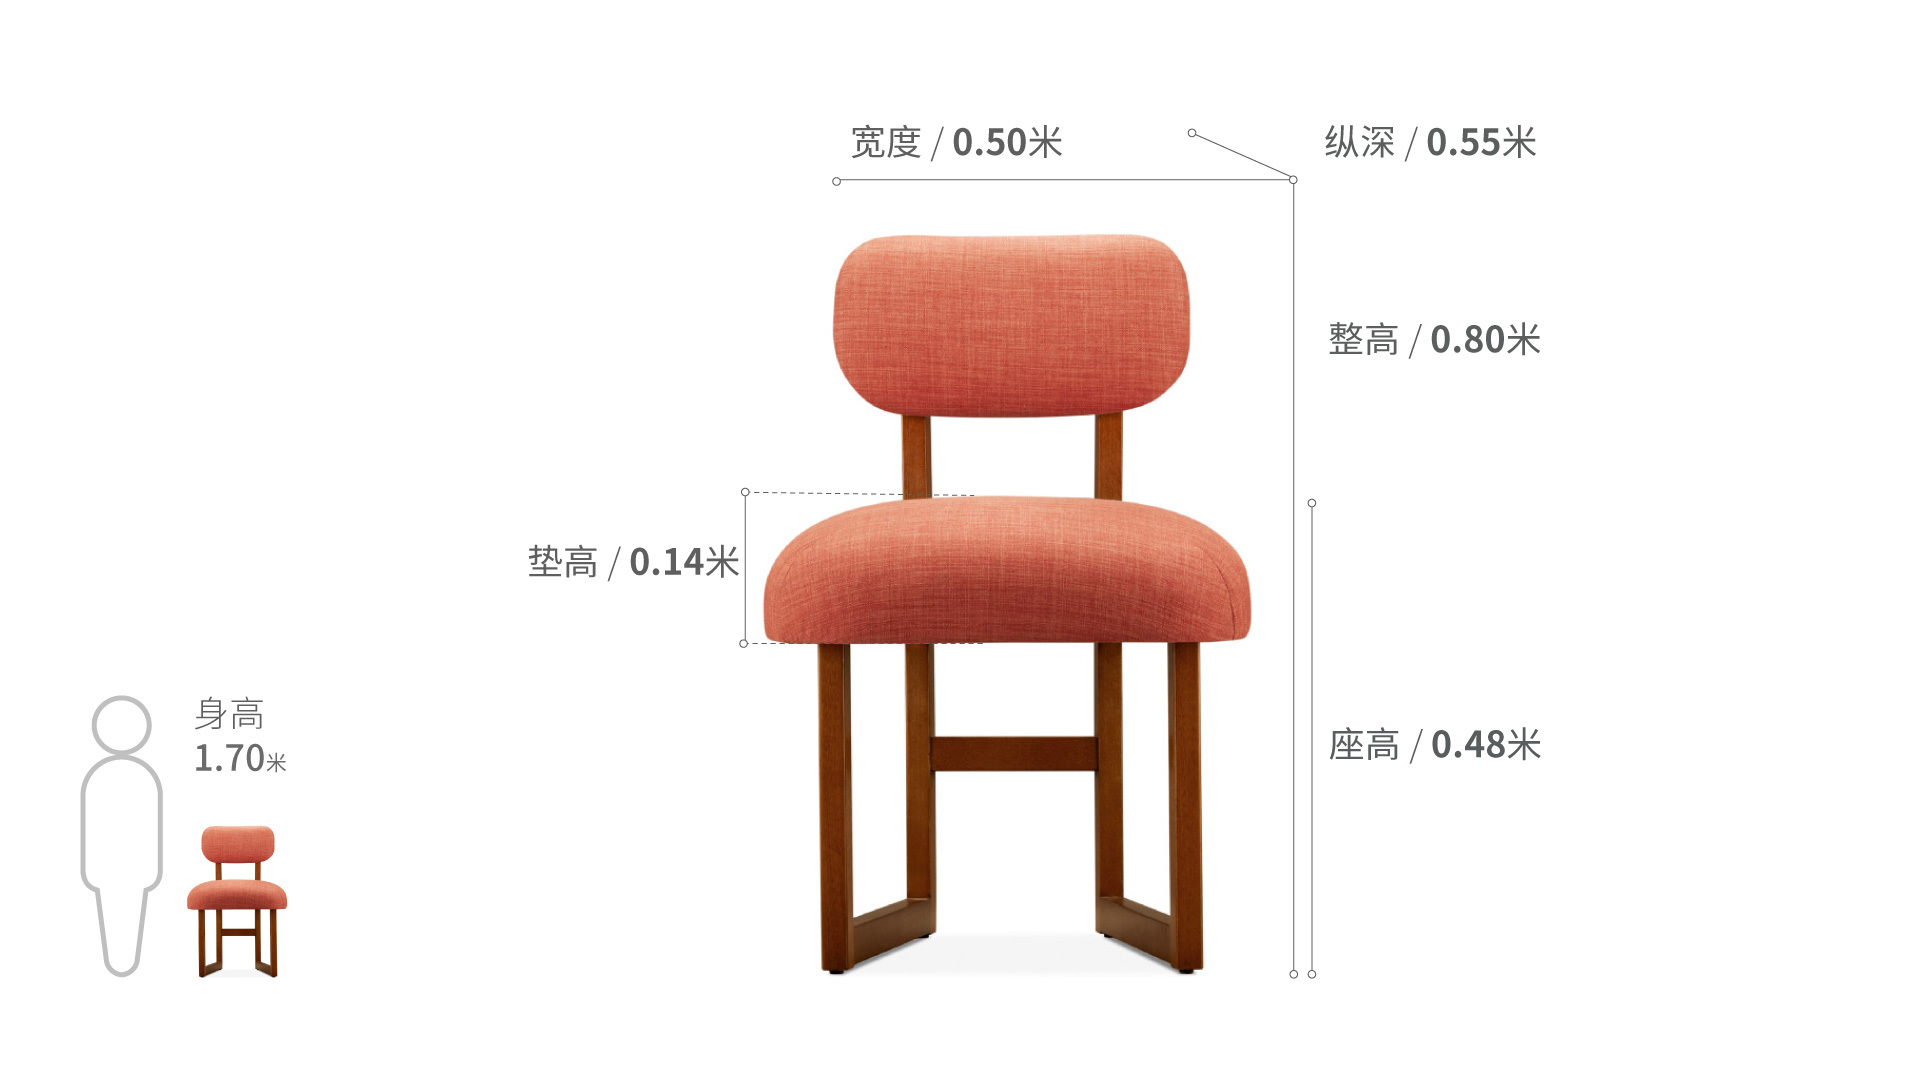 【木匠木工】如何制作一个户外椅子_哔哩哔哩 (゜-゜)つロ 干杯~-bilibili